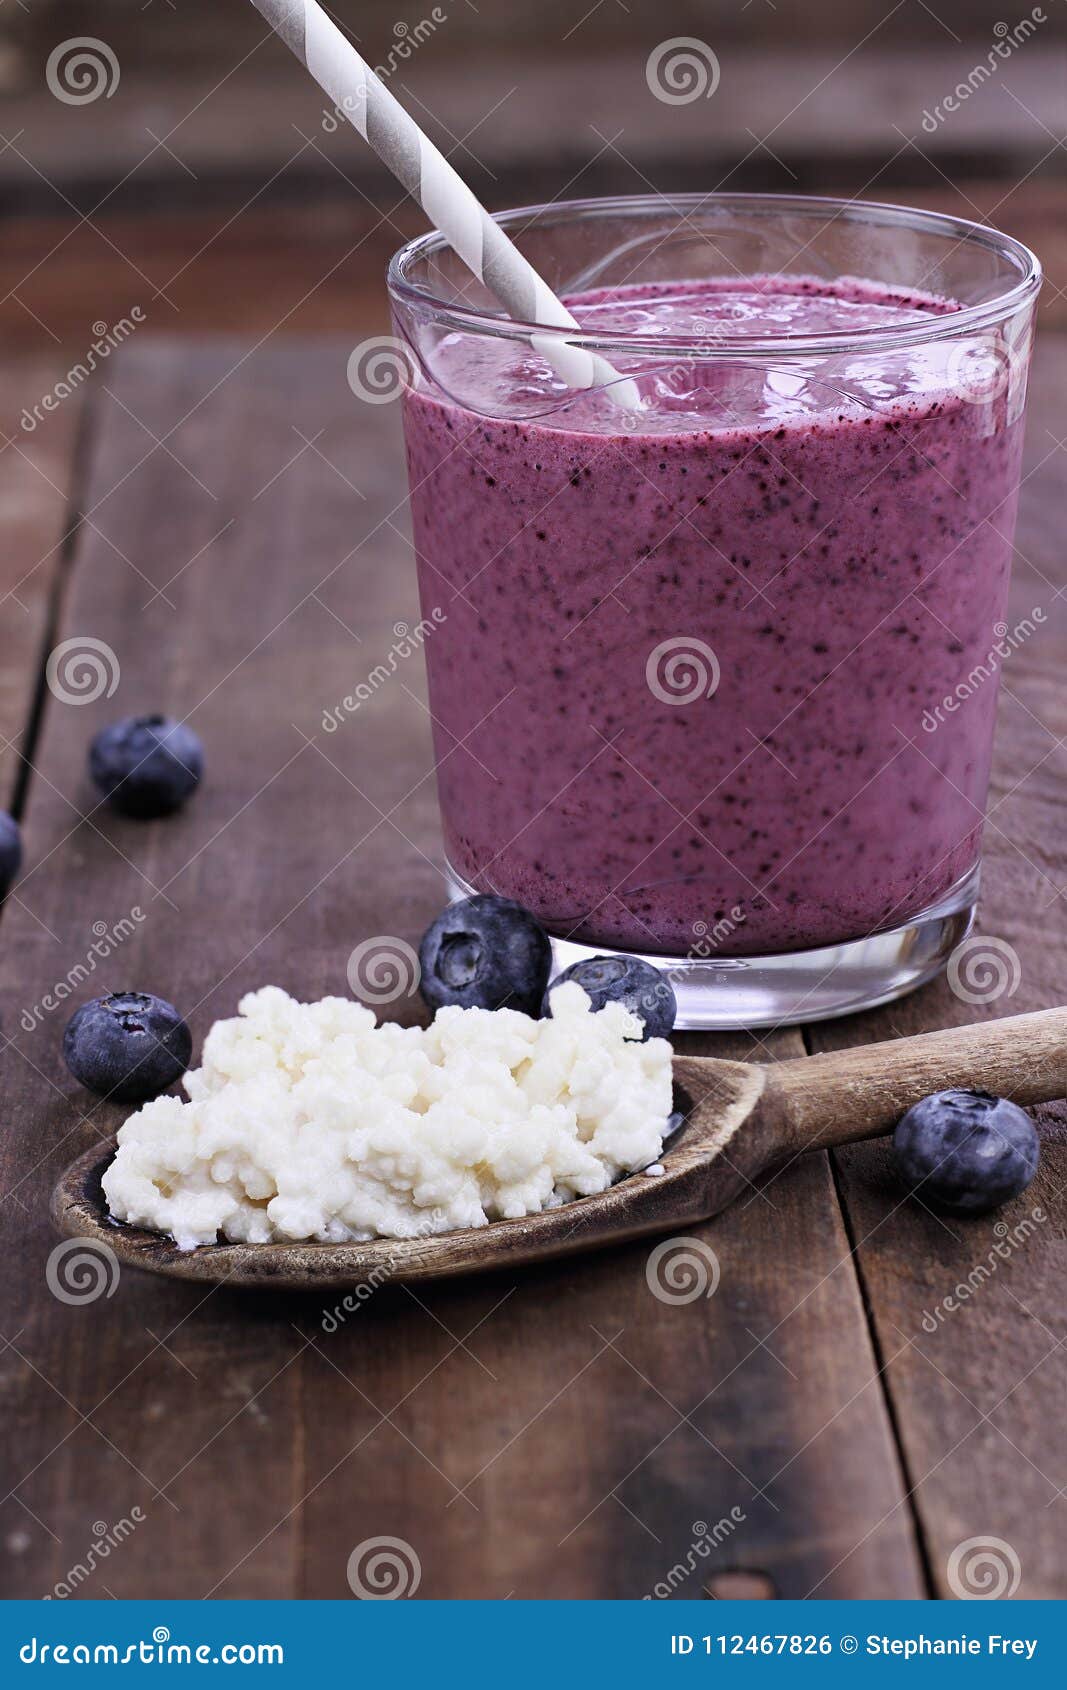 kefir grains and blueberry kefir smoothie